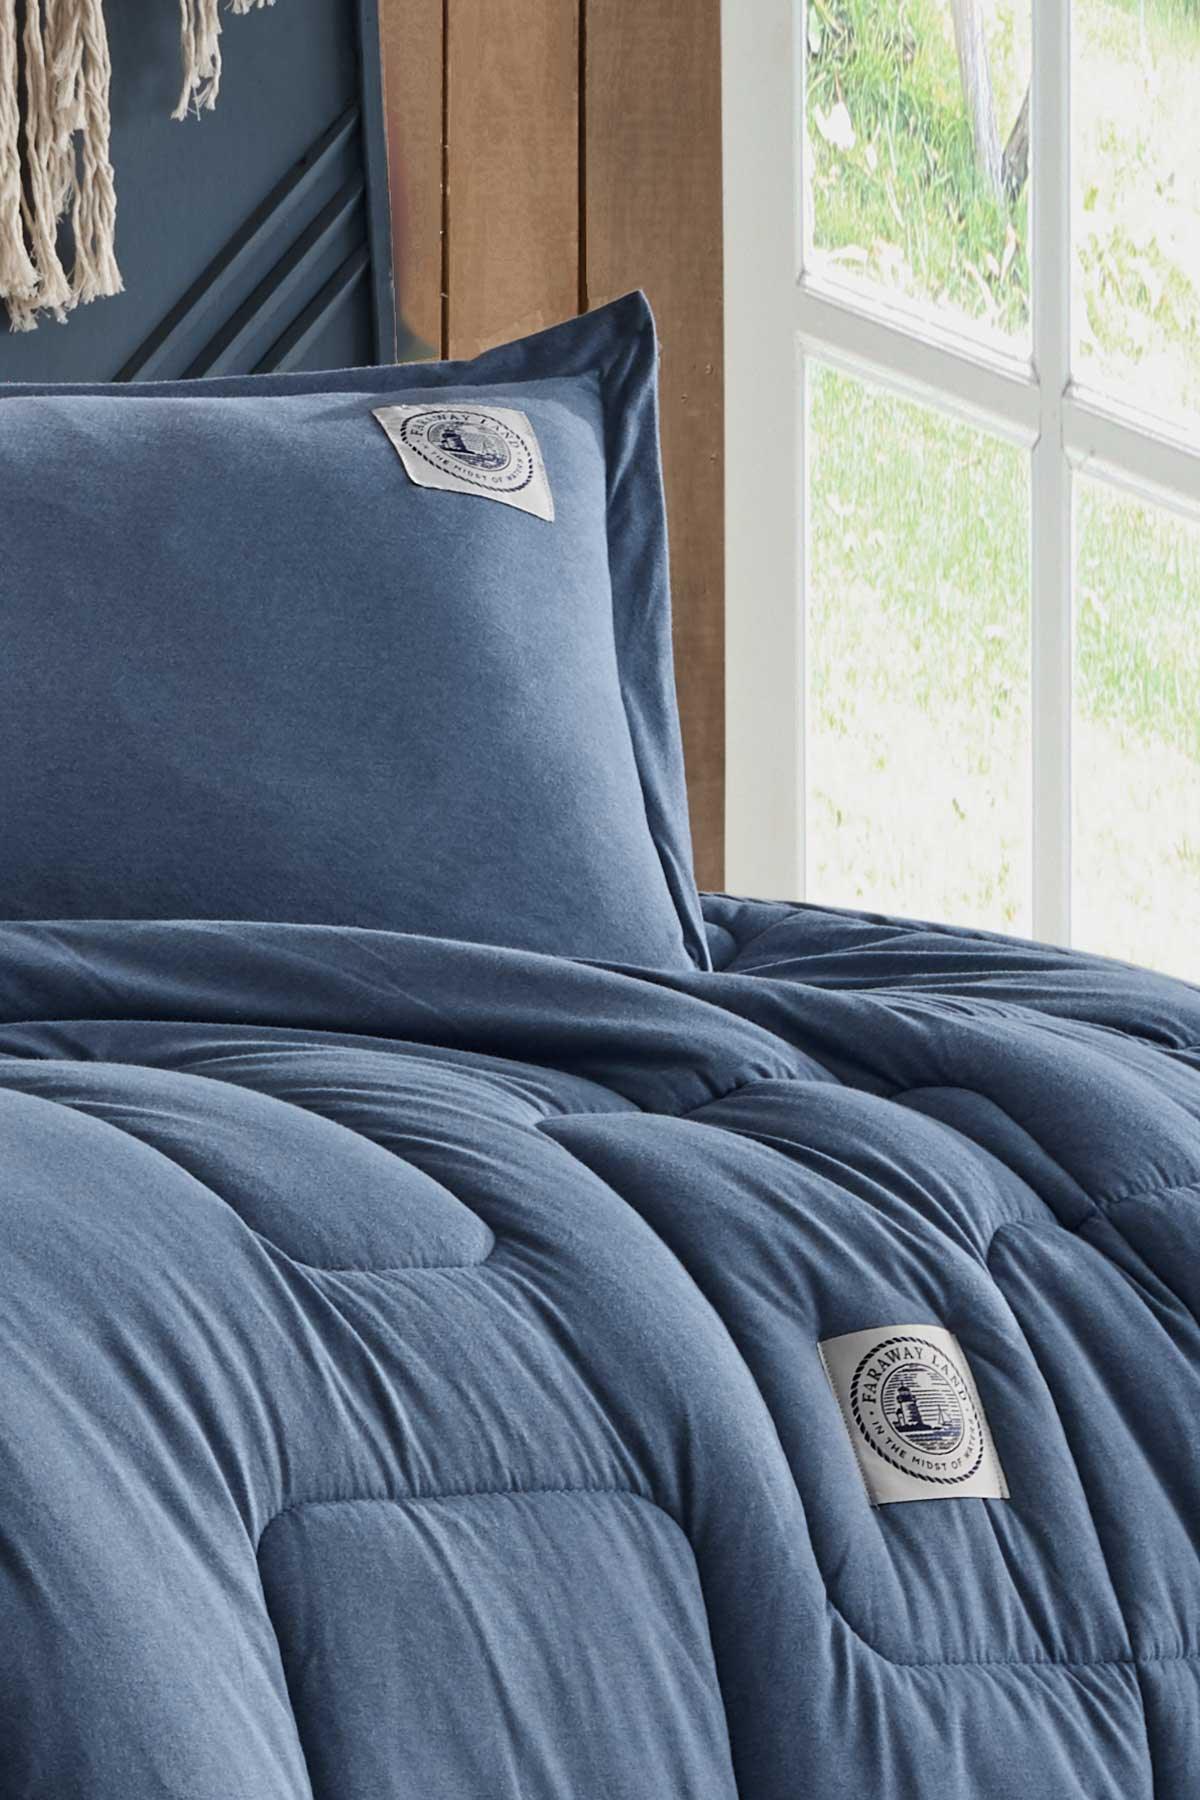 Kapsül Comfort Set Modern Uyku Seti Çift Kişilik Mavi - Elart Home